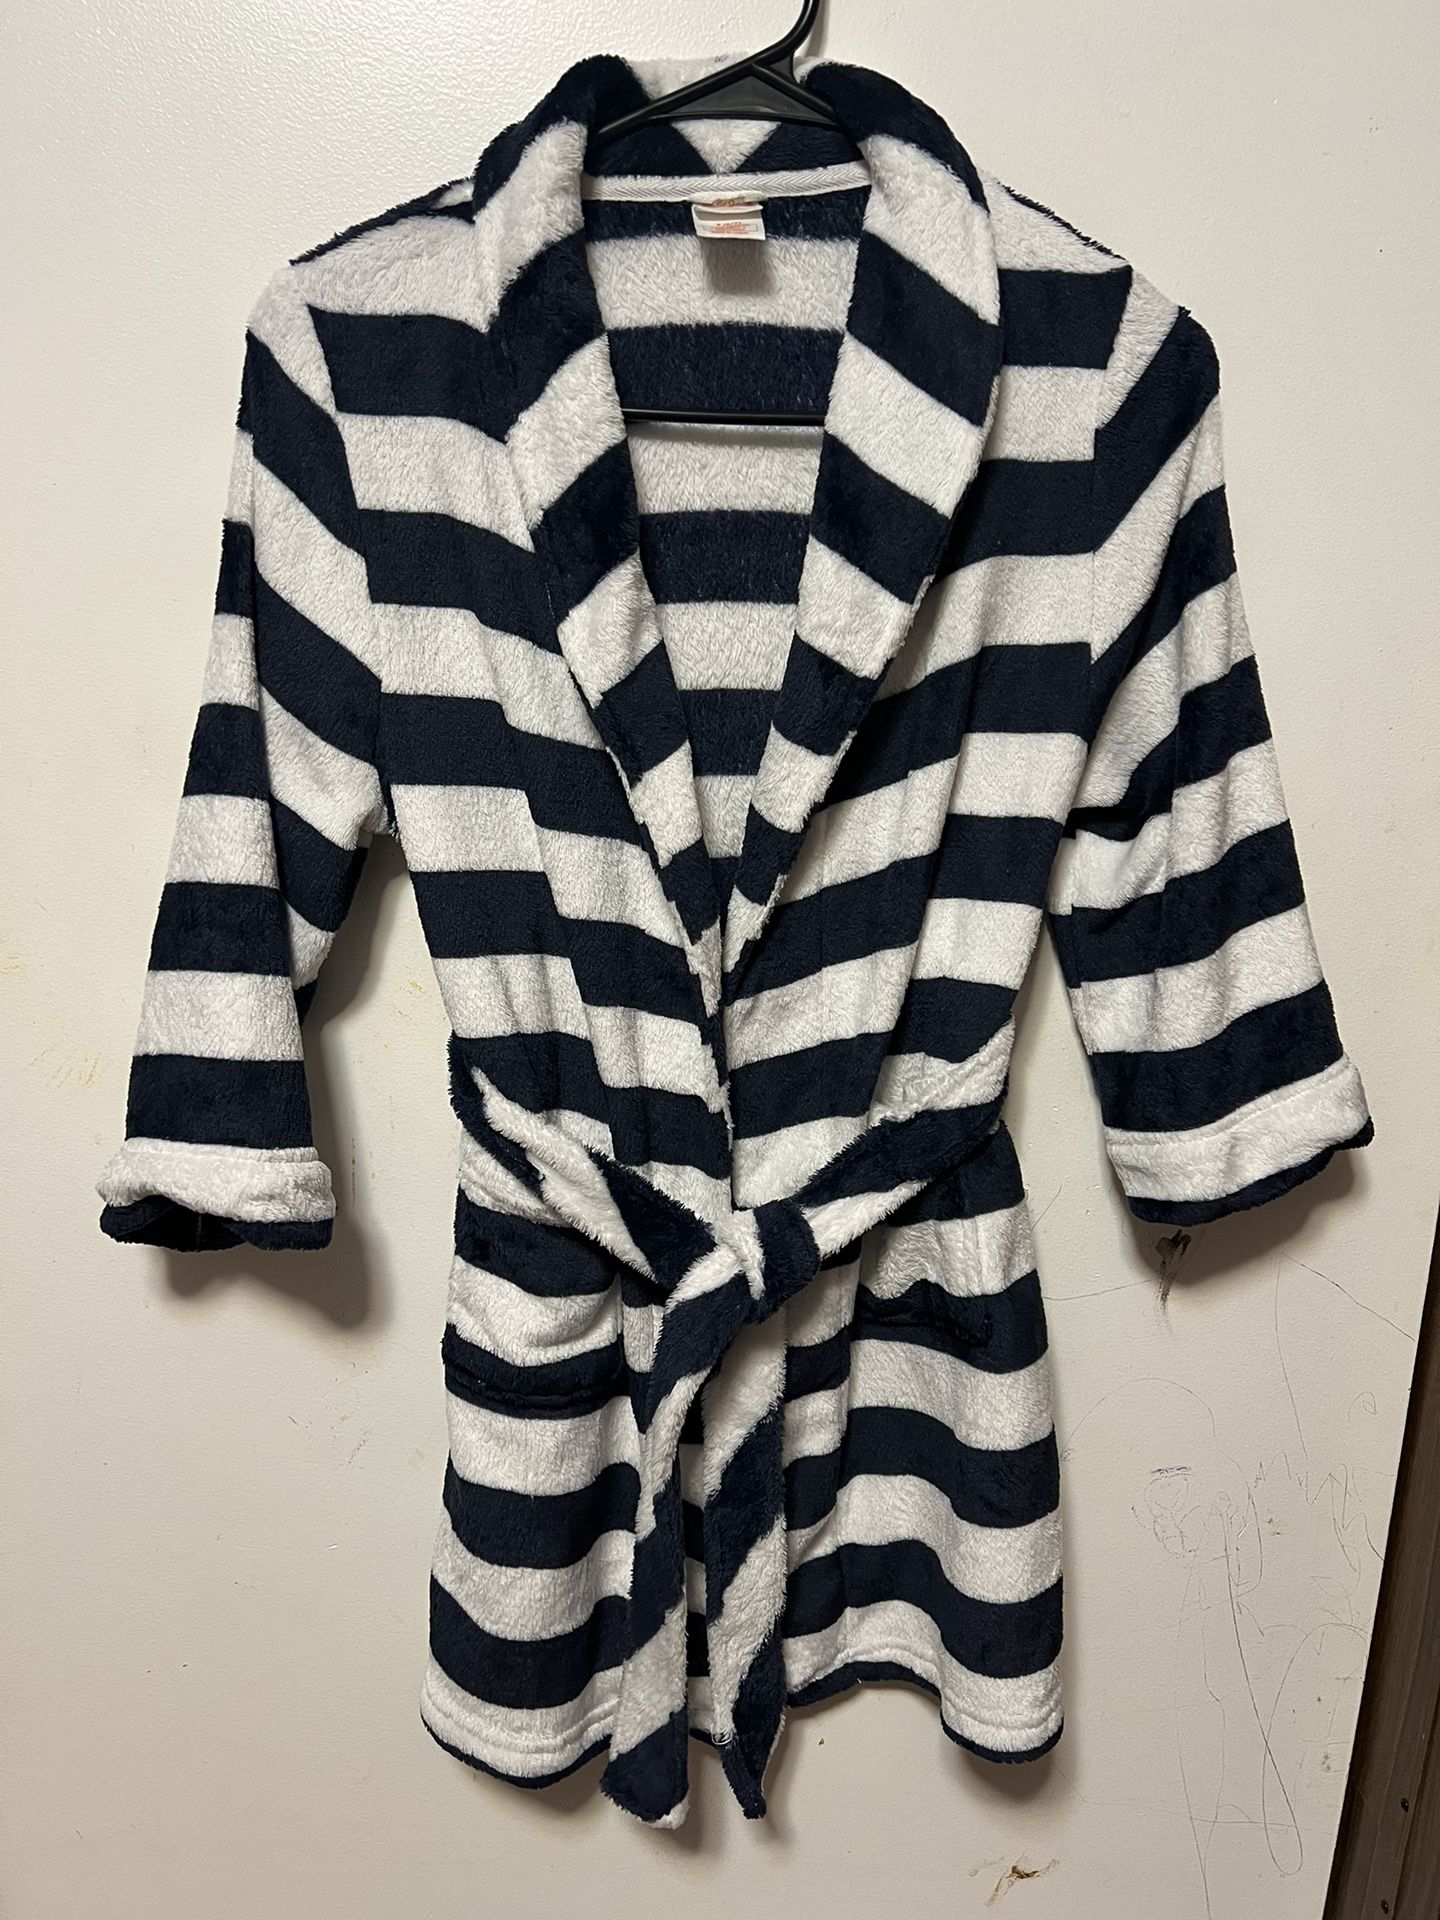 Cat & Jack sleepwear warm robe for boys/girls size S (6/7)